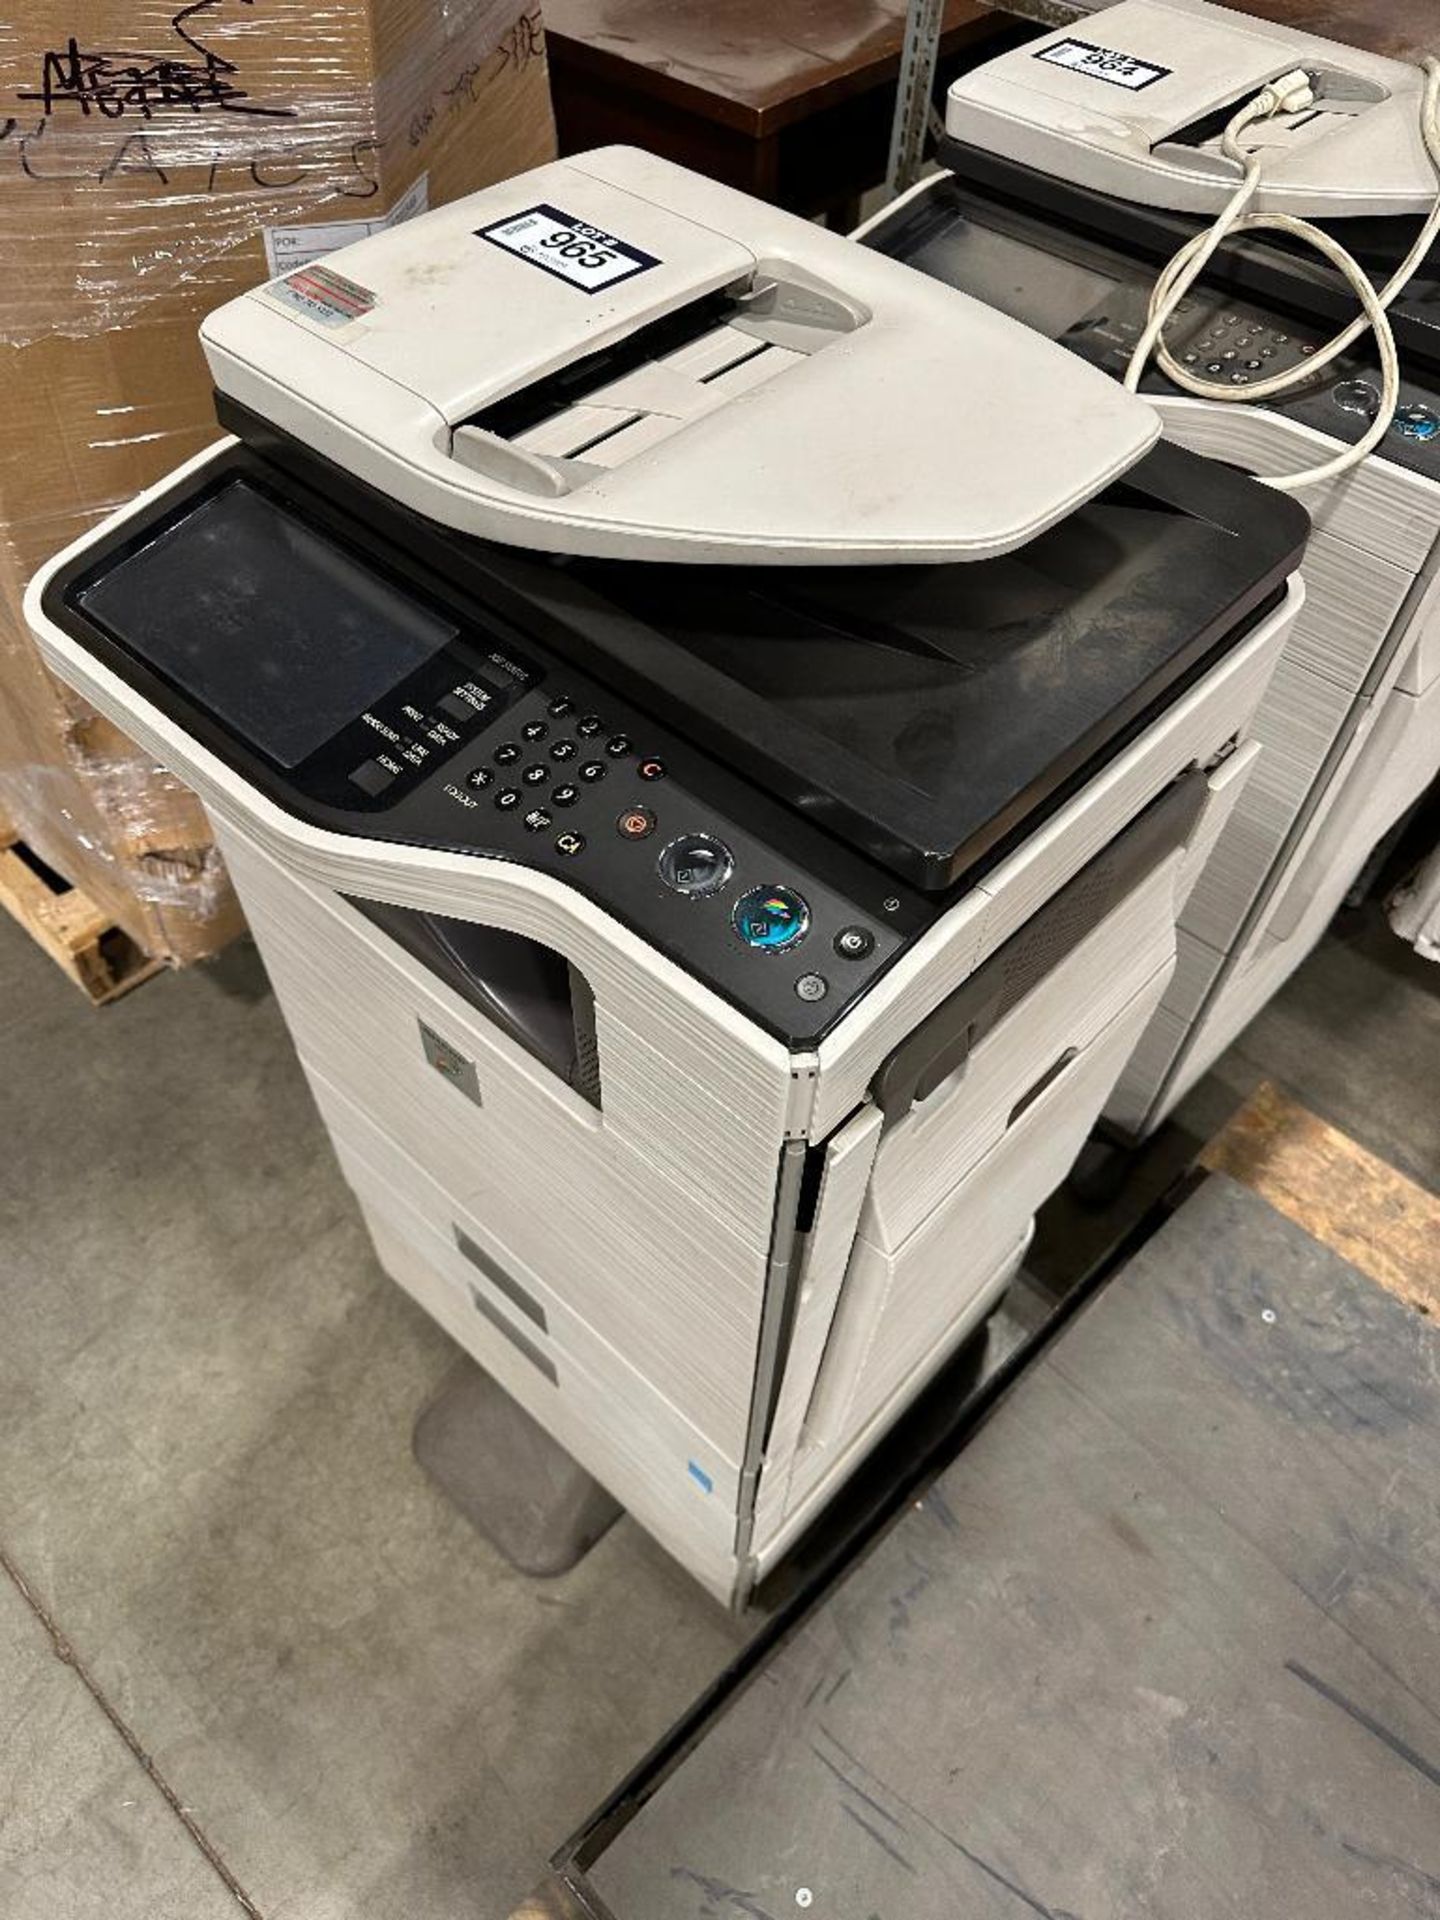 Sharp MX-C311 Printer/Copier - Image 3 of 4